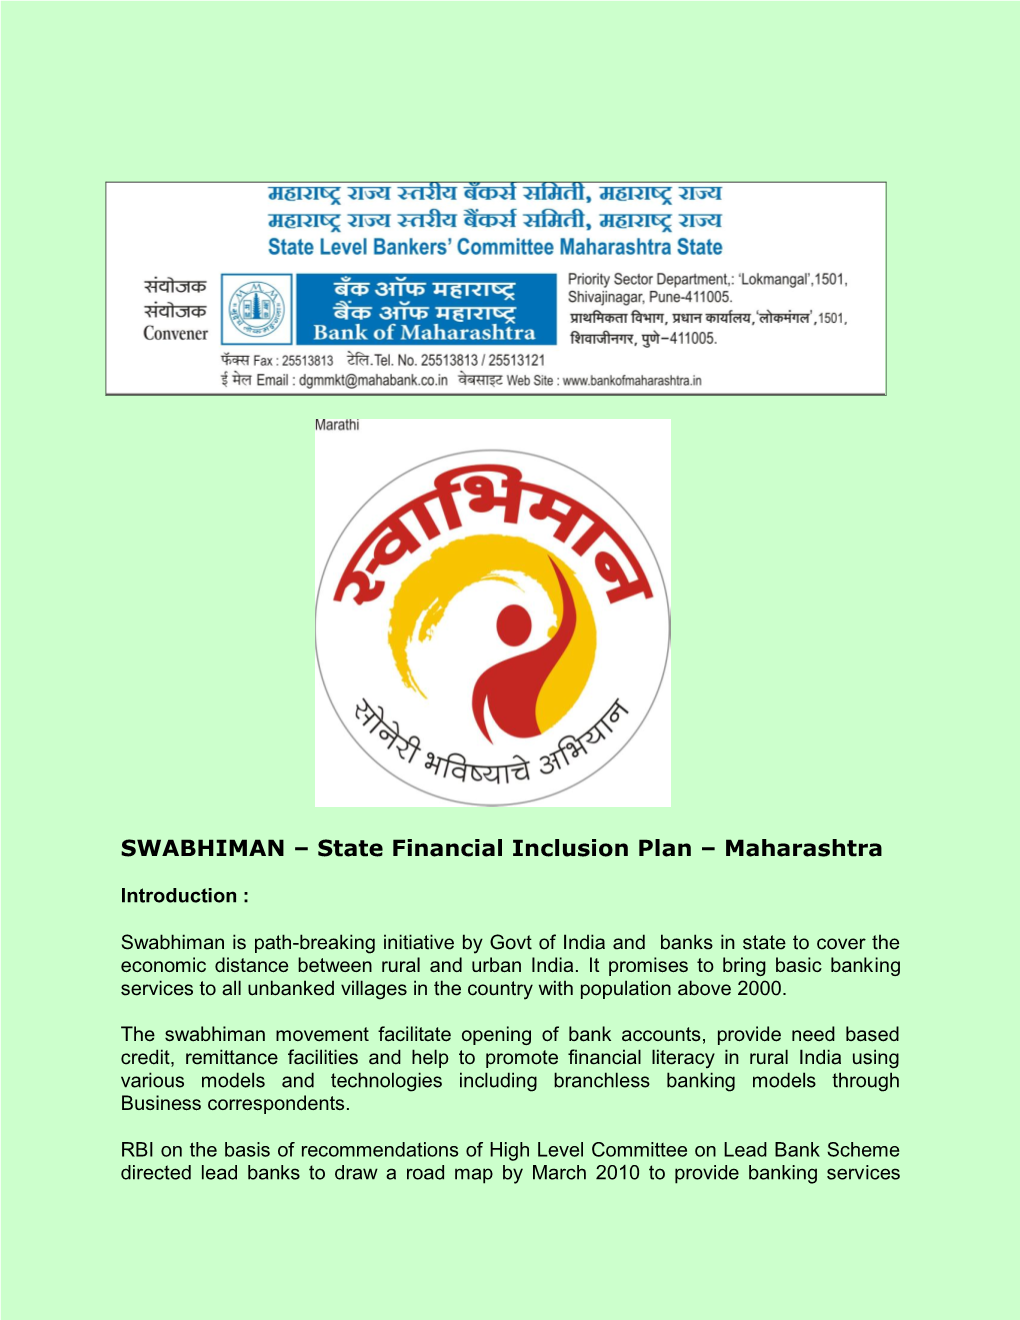 SWABHIMAN – State Financial Inclusion Plan – Maharashtra